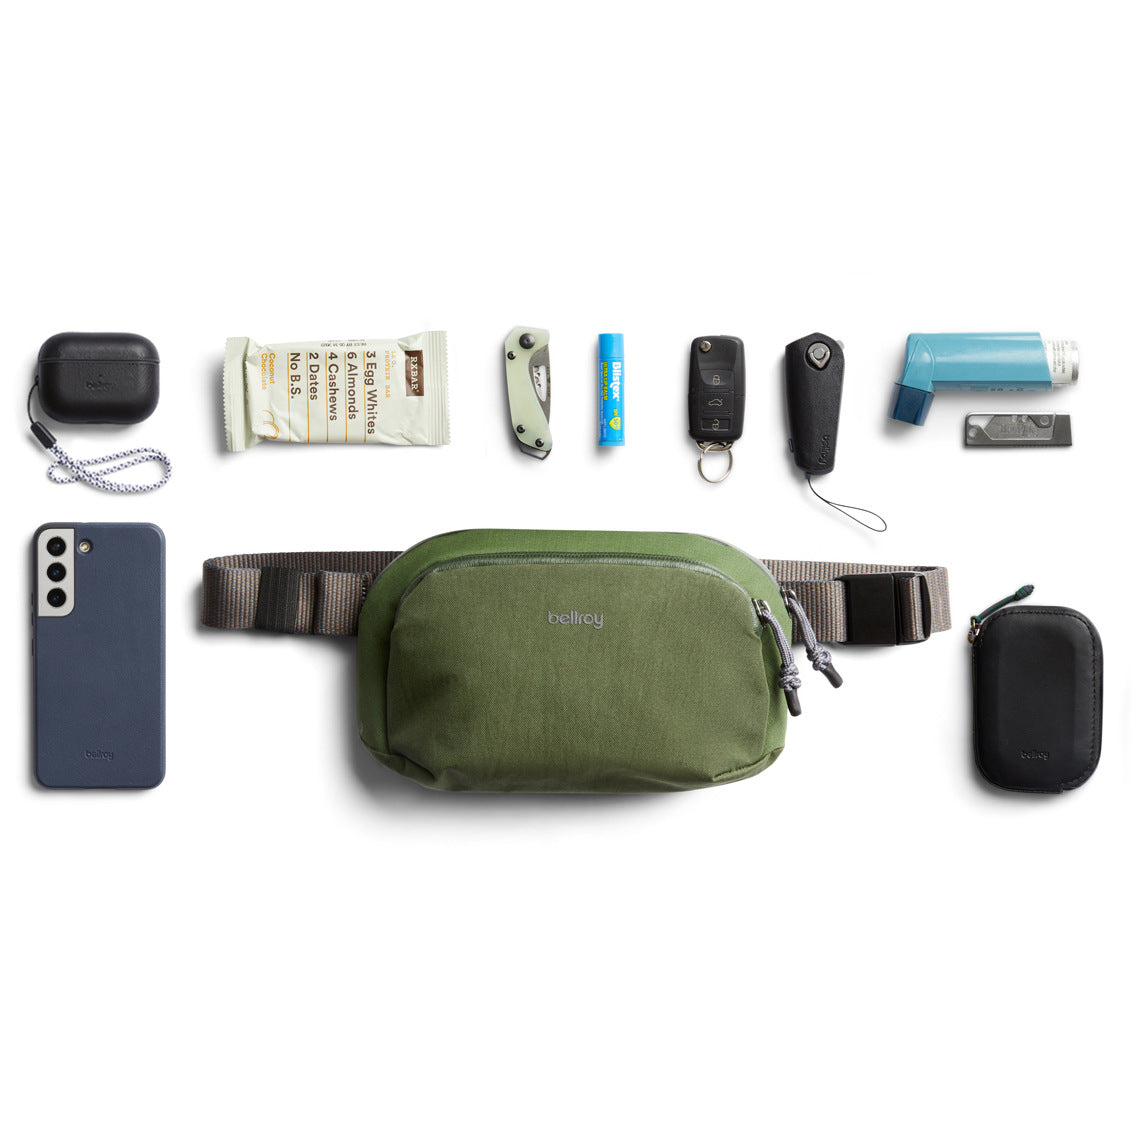 Venture Hip Bag 1.5L - Ranger Green